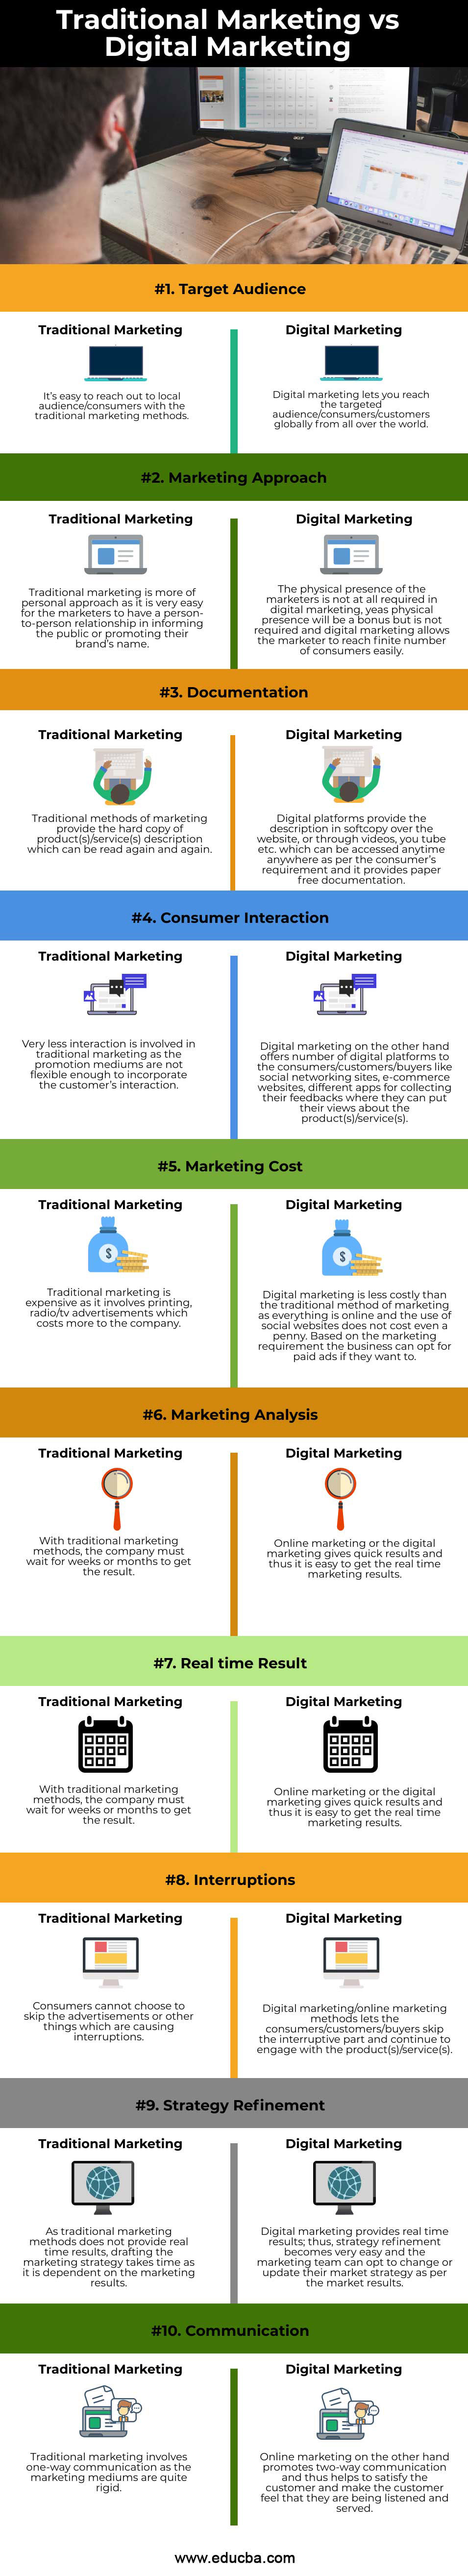 Traditional-Marketing-vs-Digital-Marketing-info